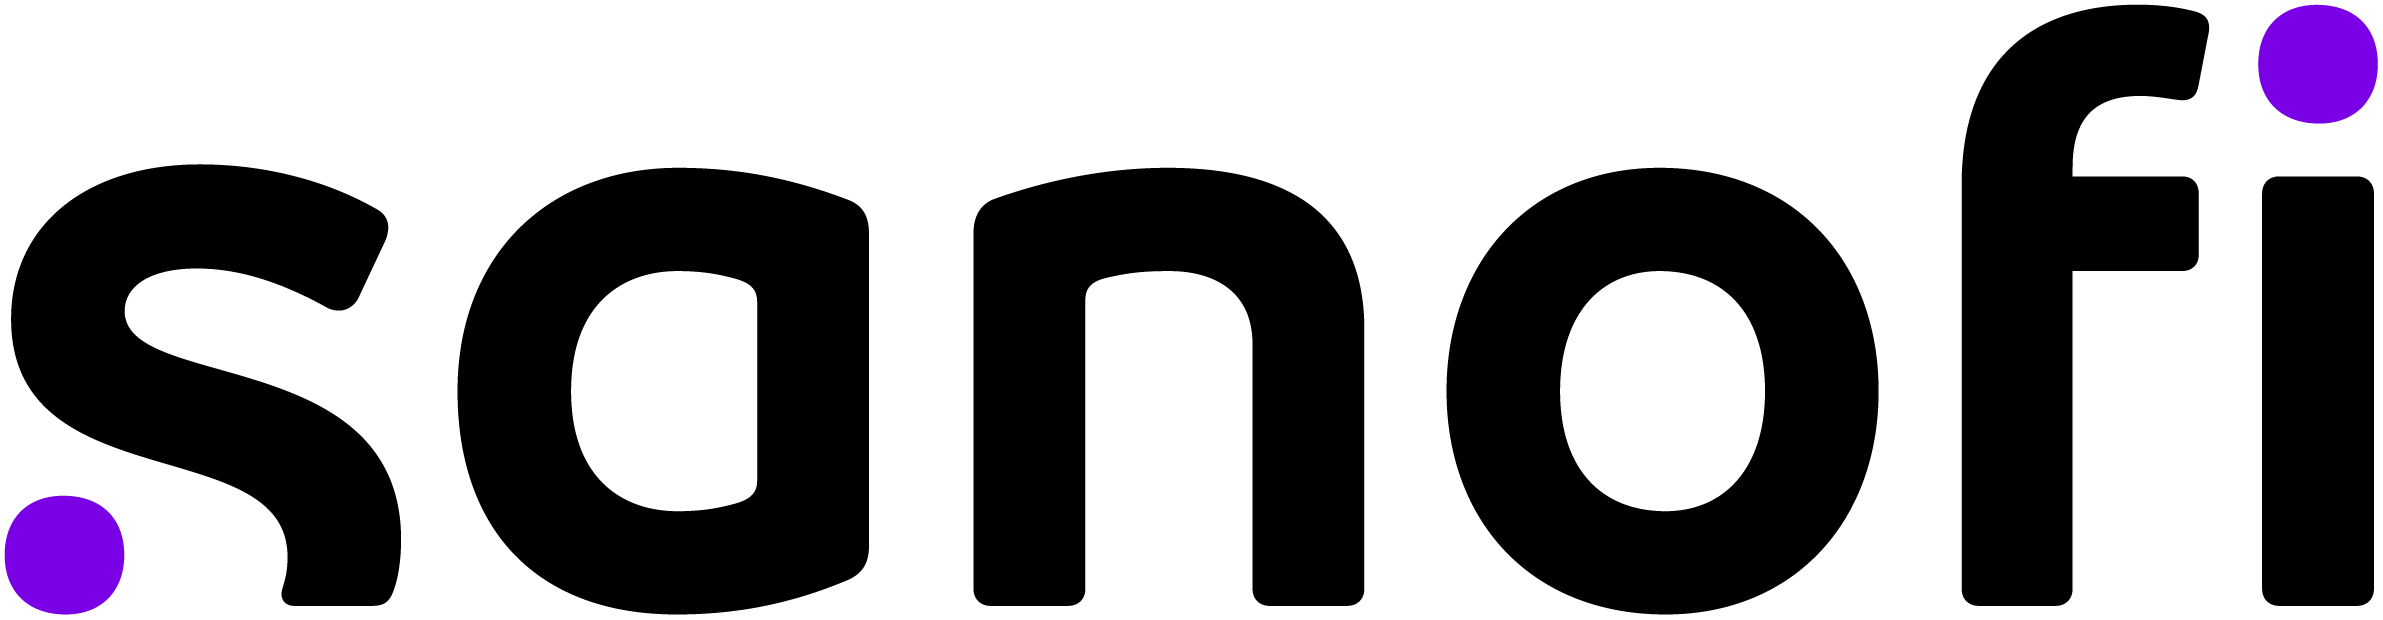 Sanofi Genzyme Logo